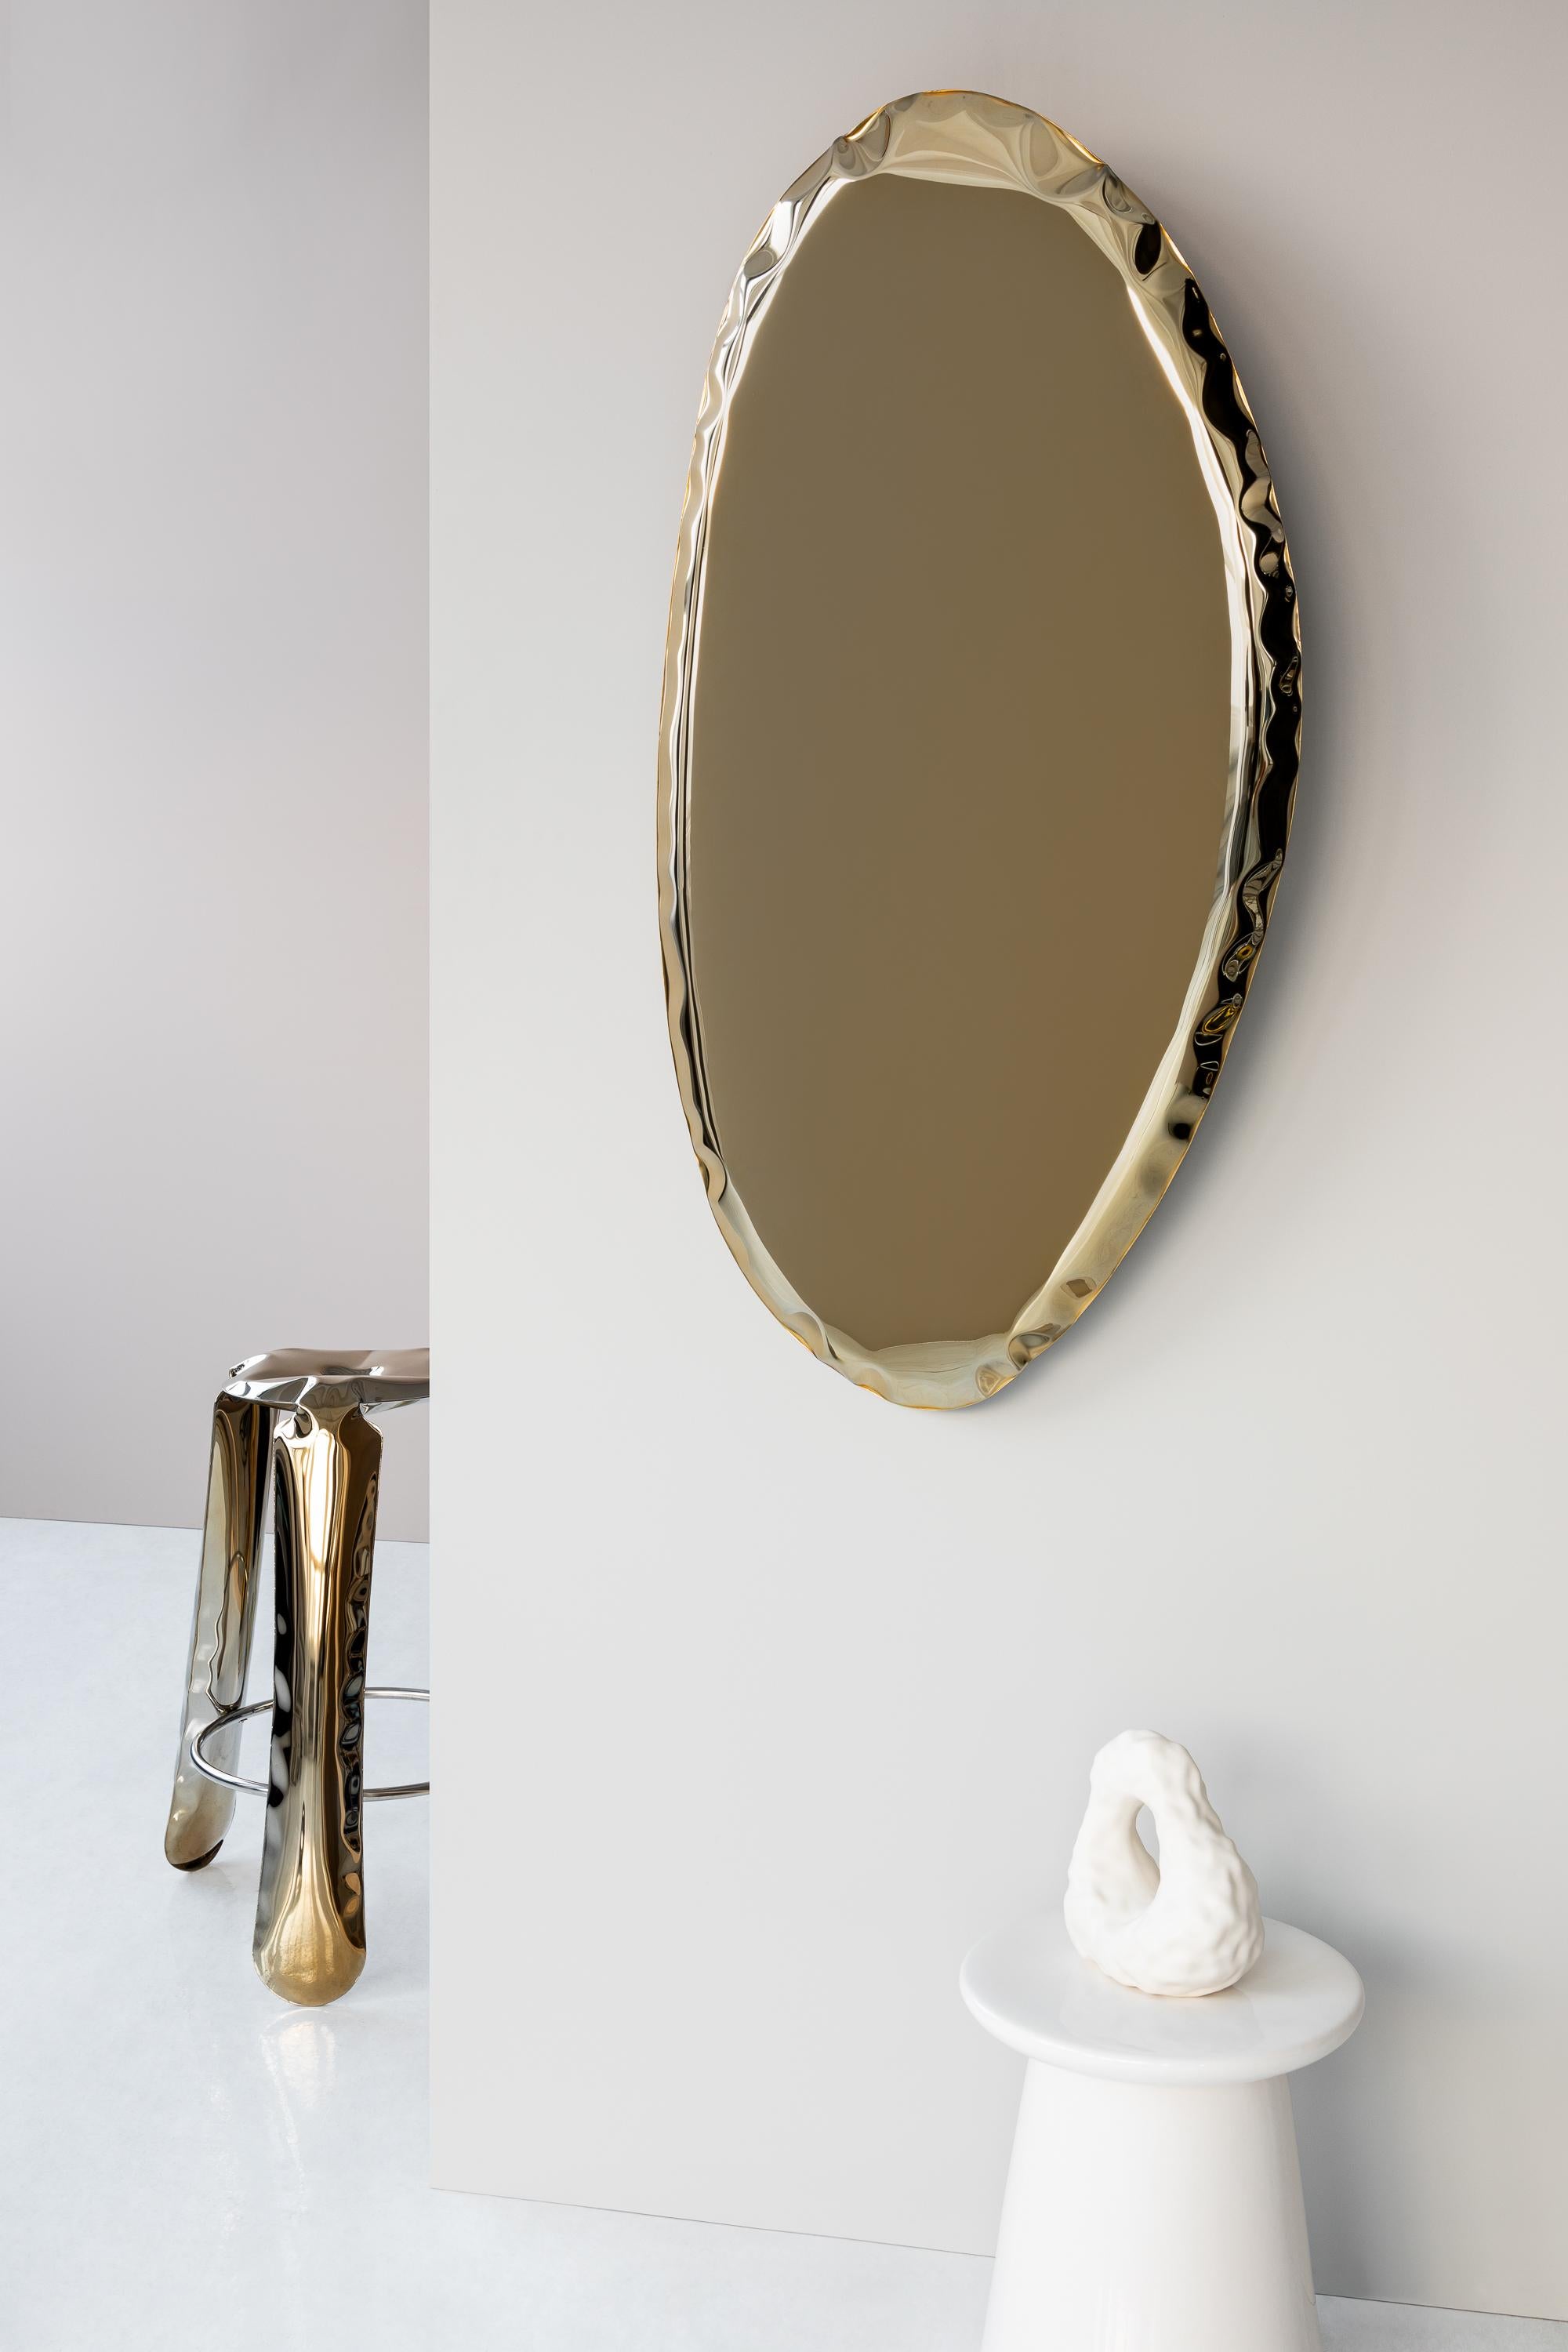 Polish Light Gold Tafla O1 Wall Mirror by Zieta For Sale